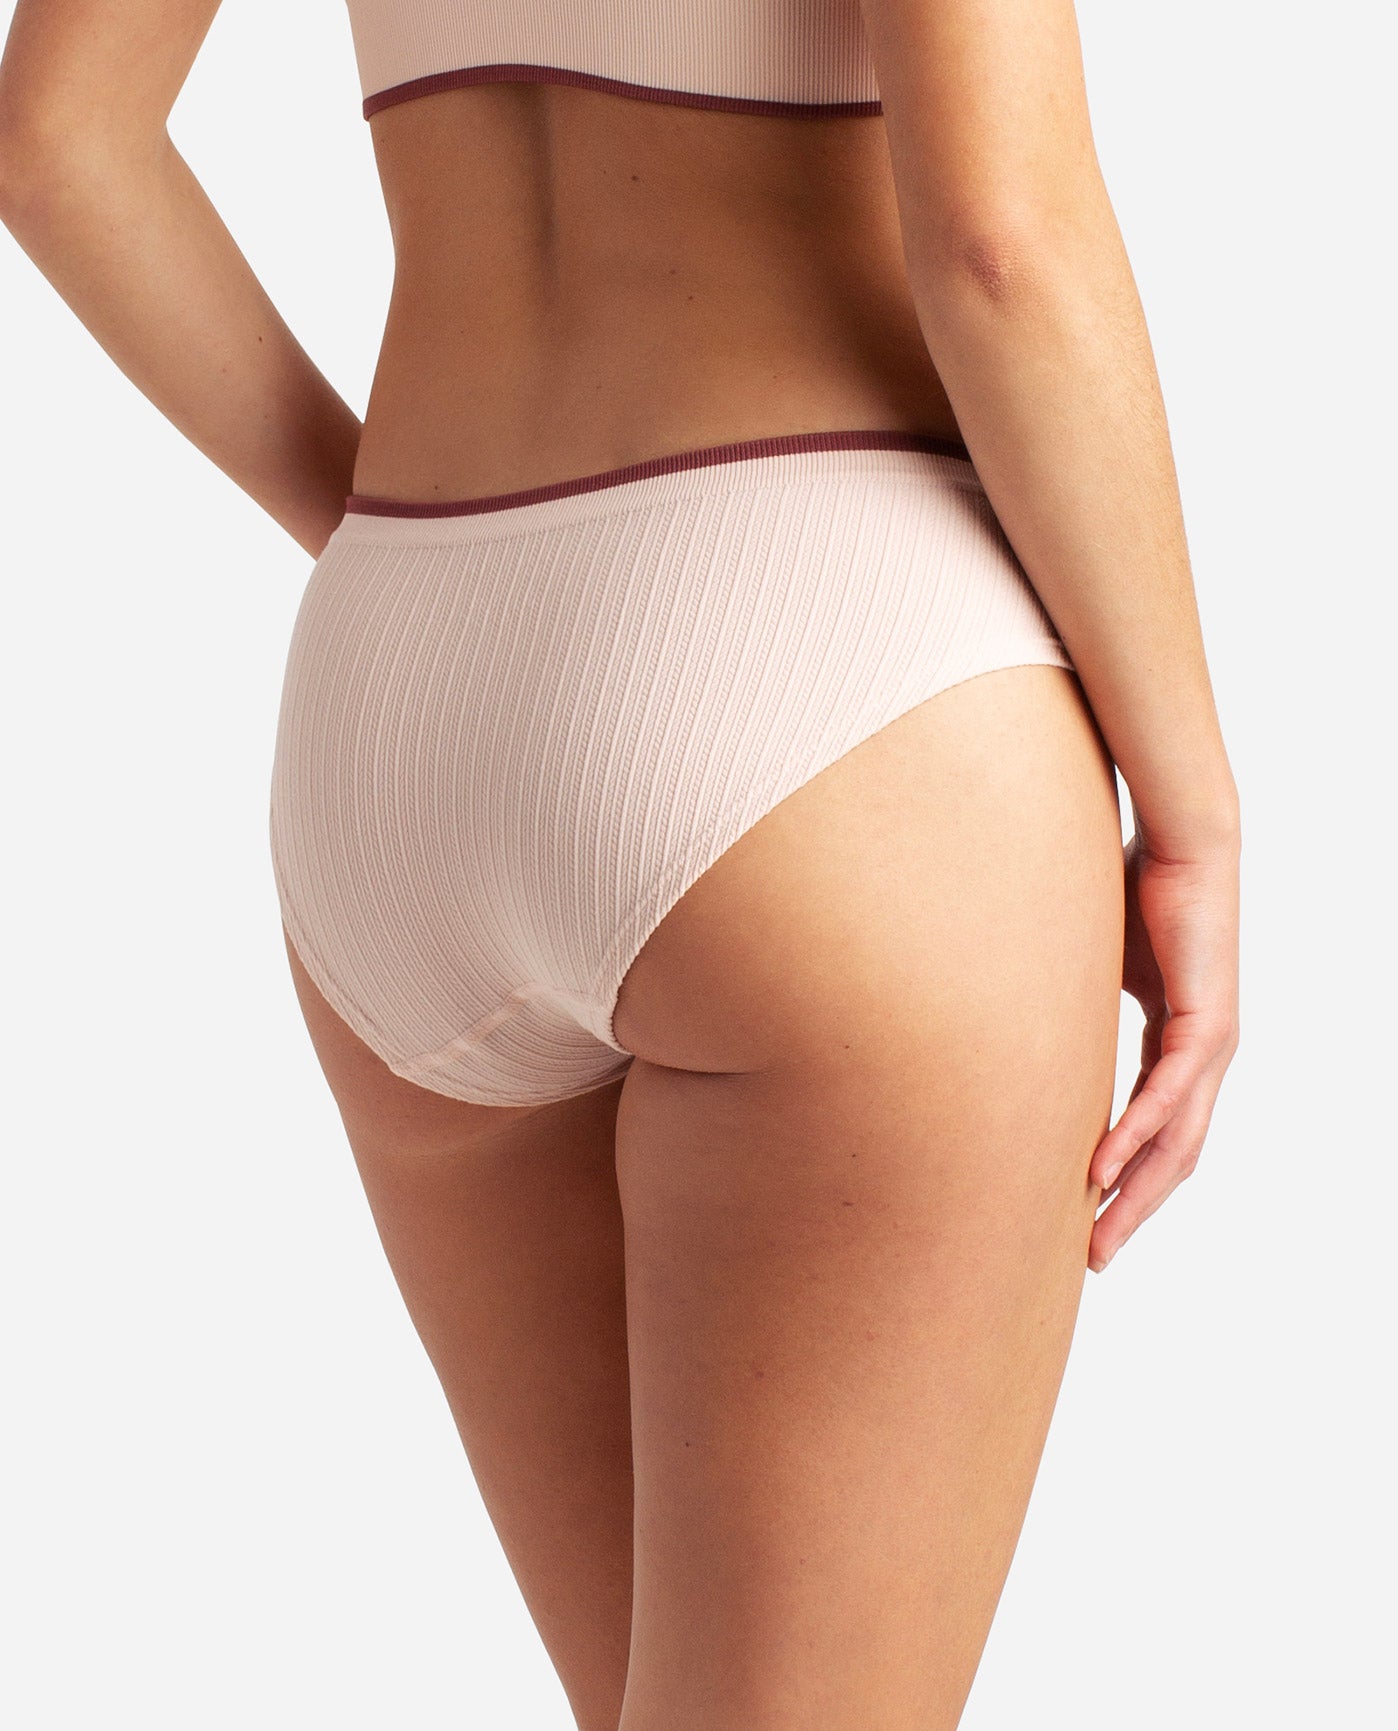 Danskin Rayon-Spandex Panties - 4-Pack, Boy Shorts (For Women